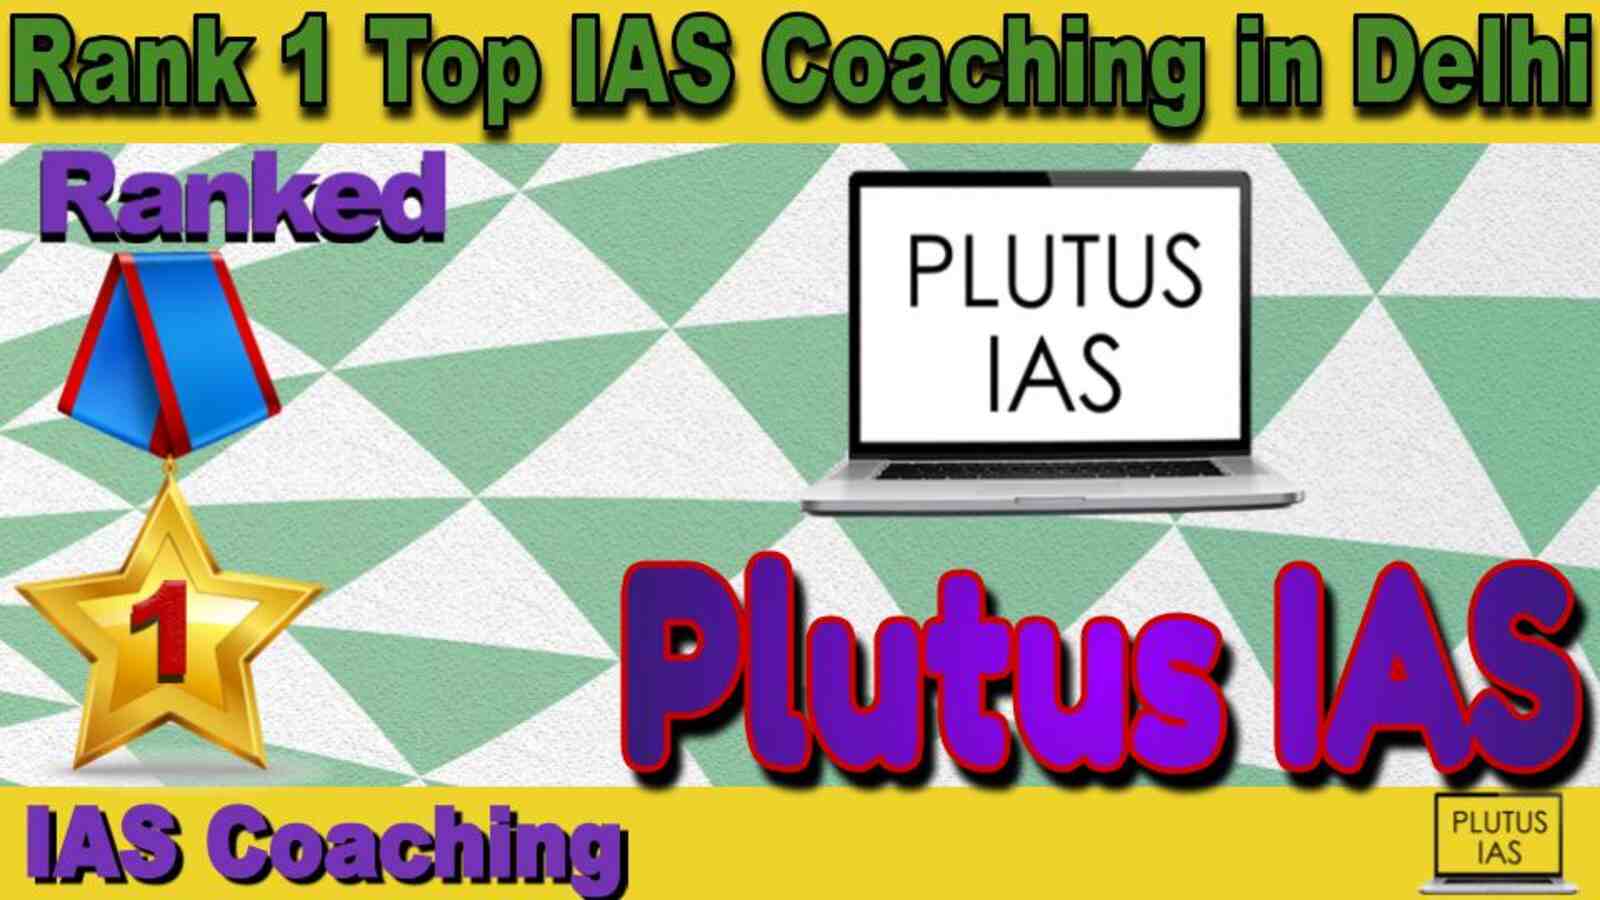 Top IAS Coaching in Delhi. Best IAS Coaching in Delhi.